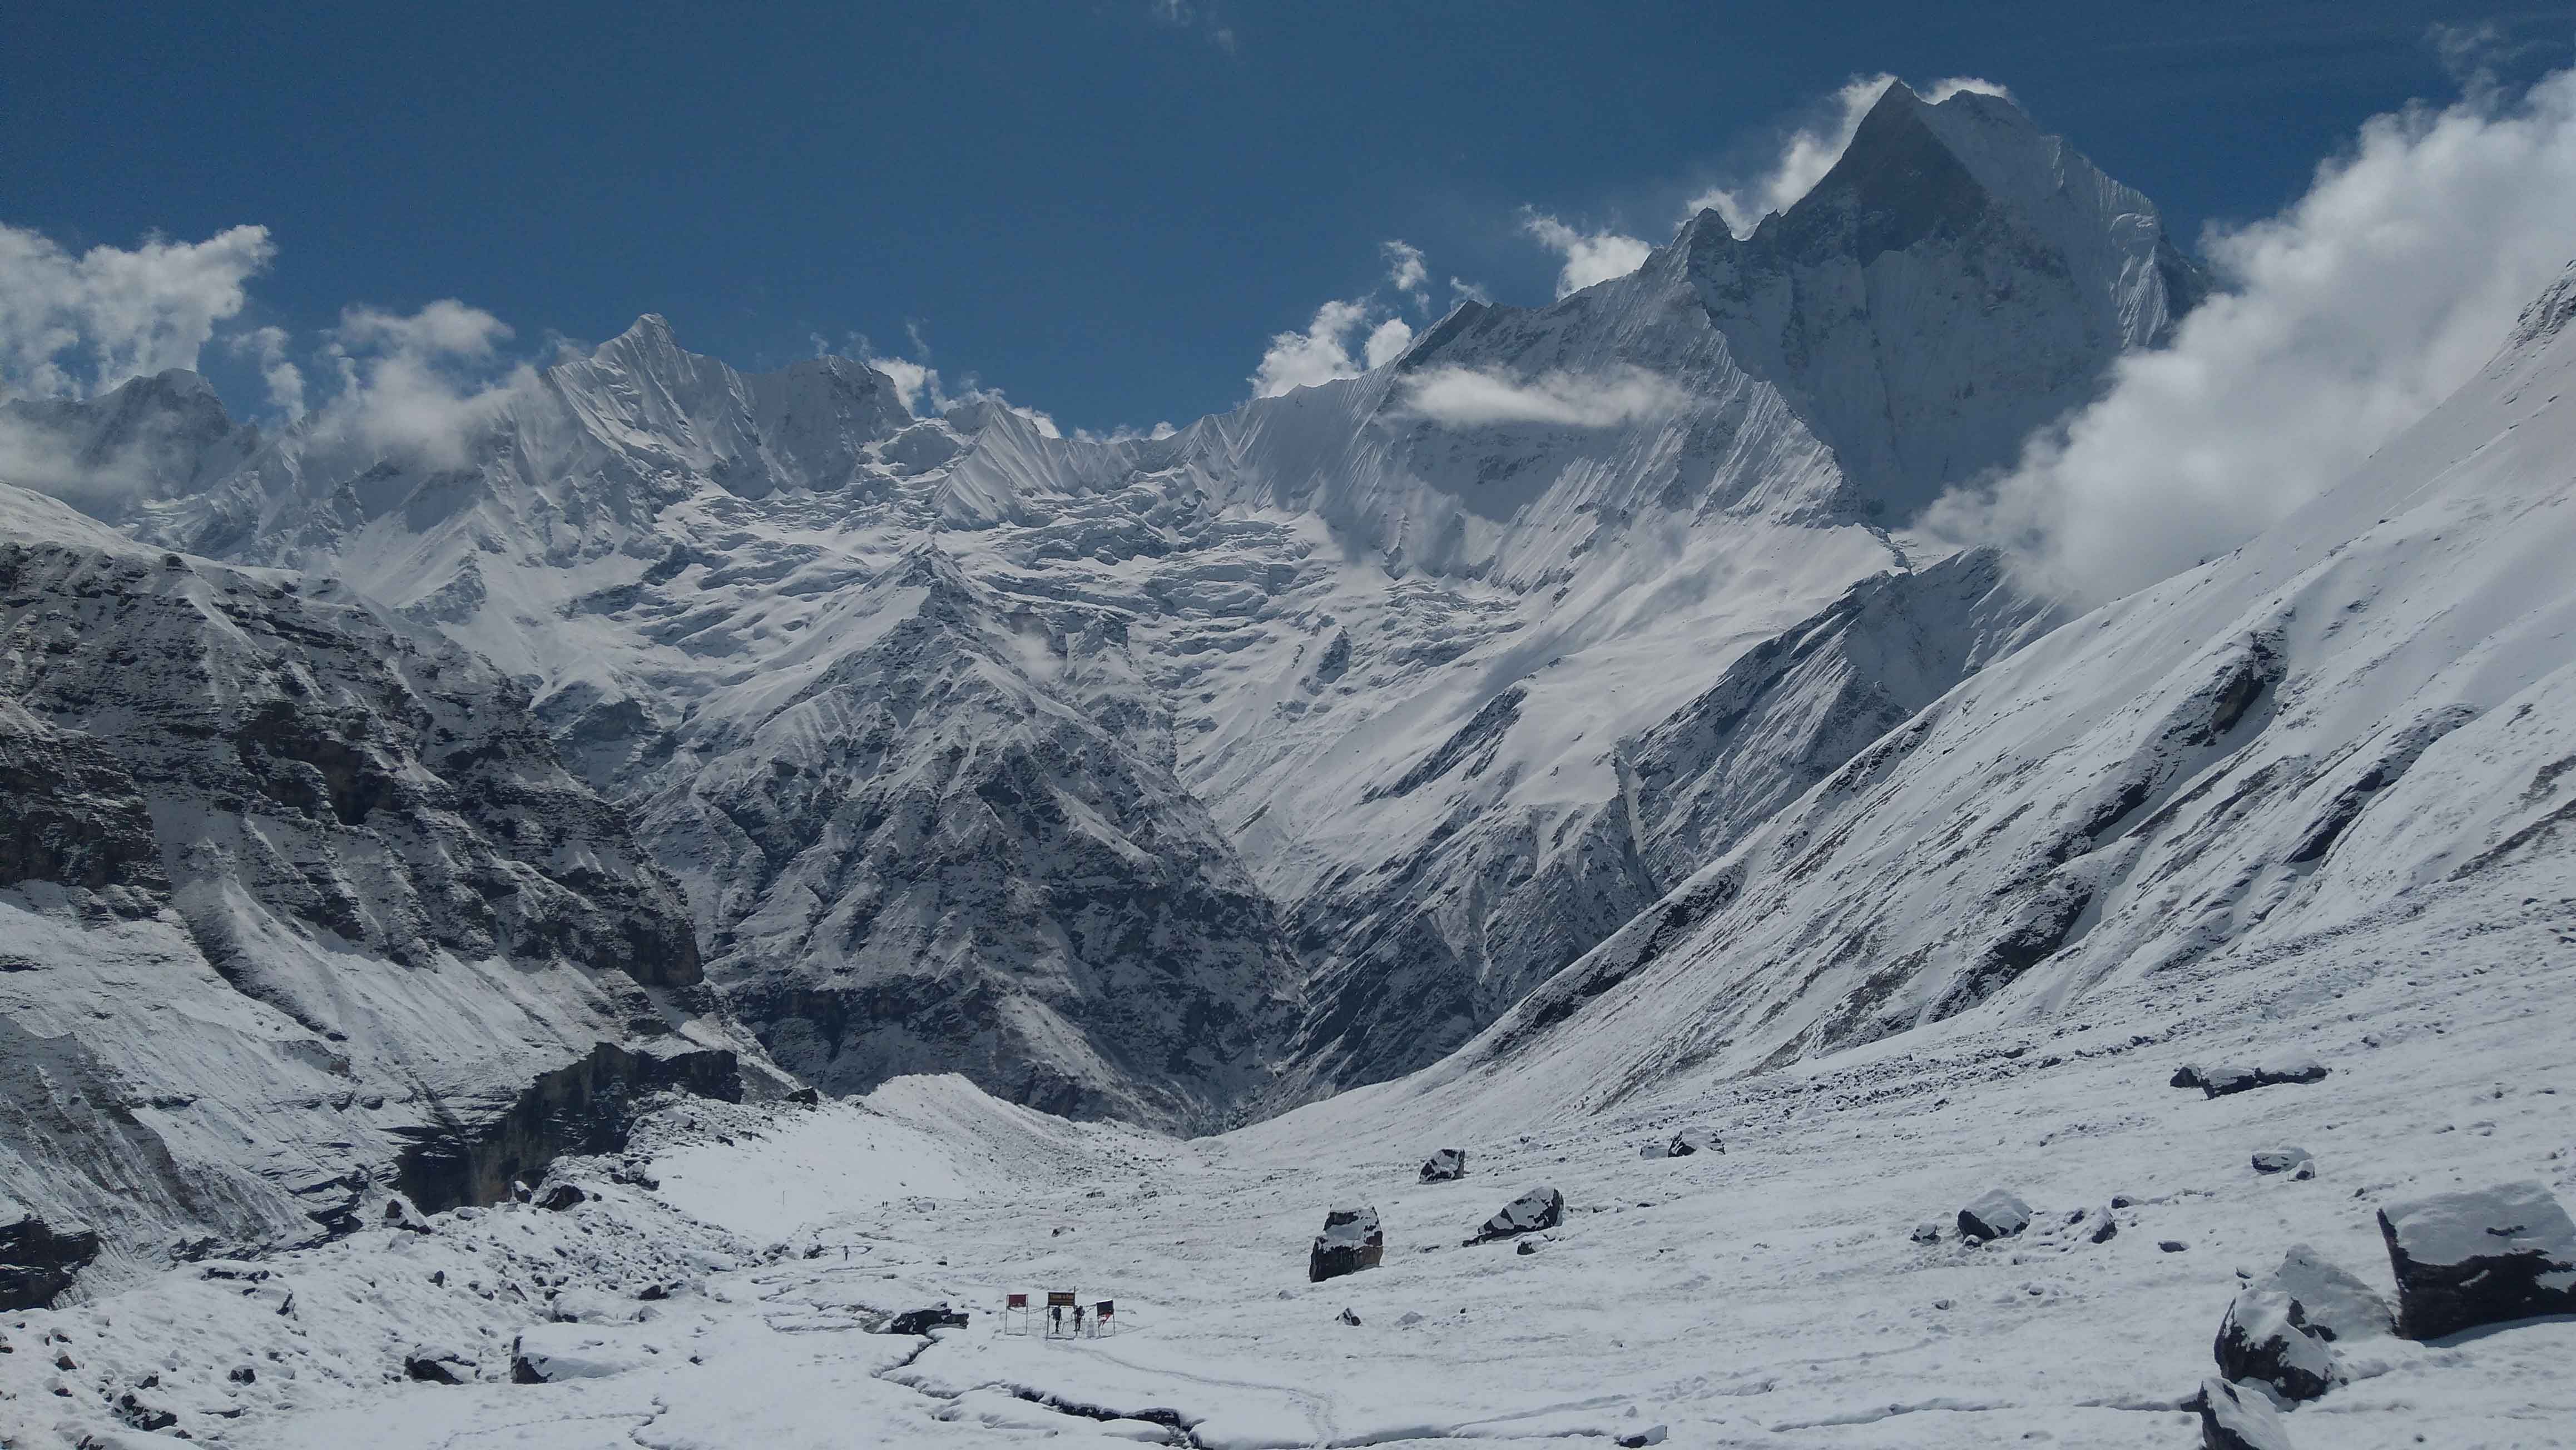 The Annapurna Base Camp Trek in Nepal